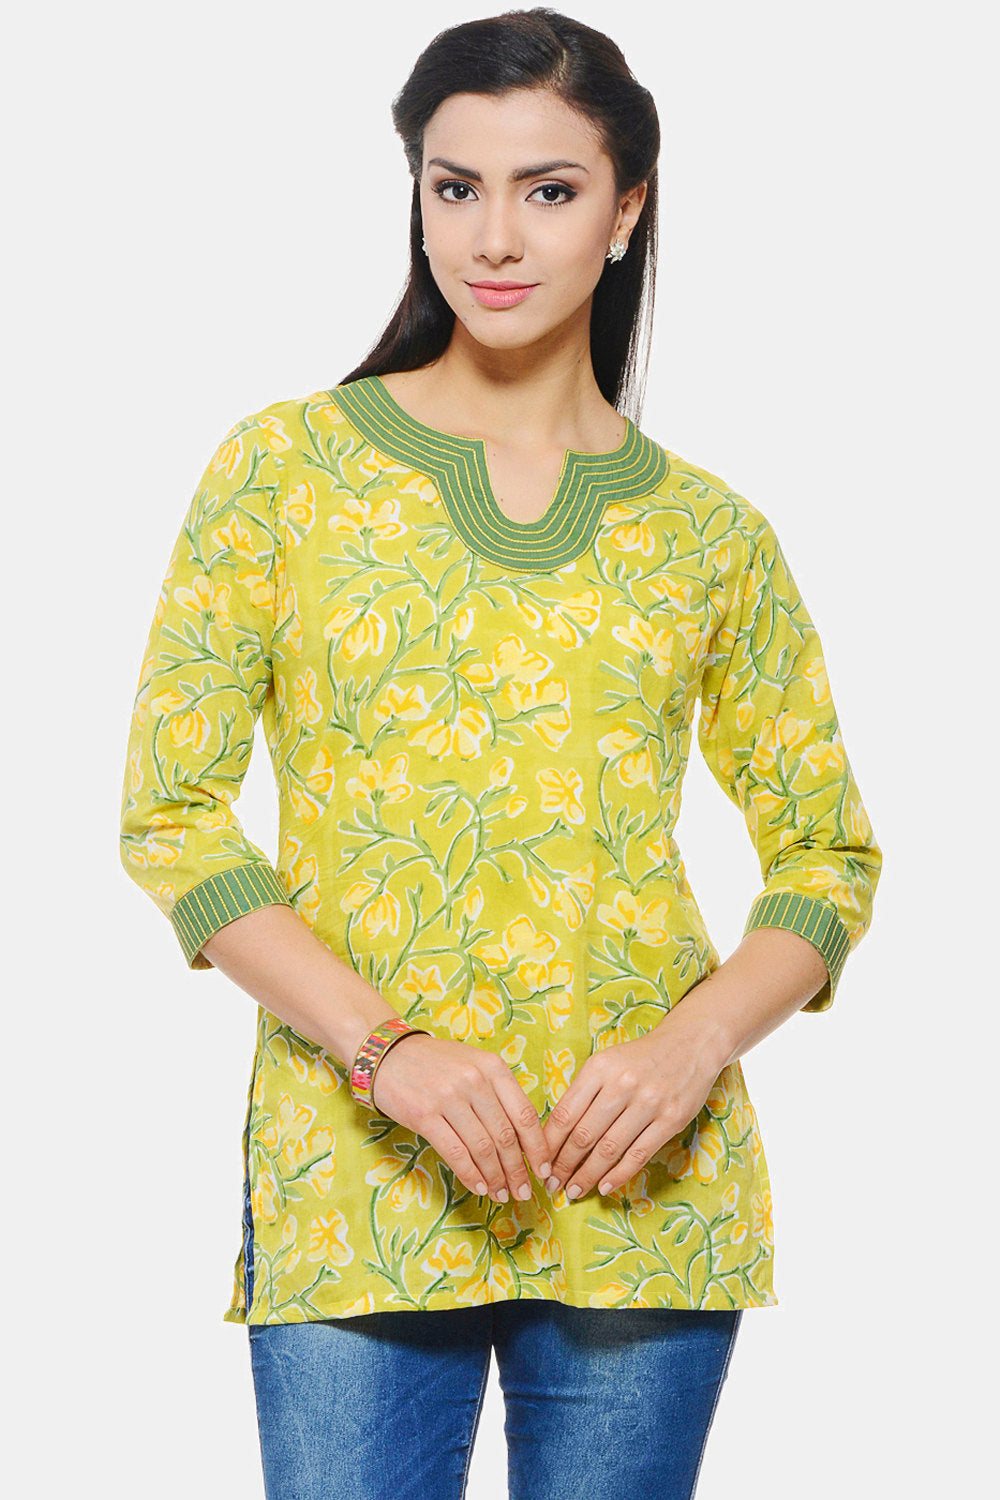 Hand Block Printed Indian tunic/ kurti in floral design - KanisaCrafts